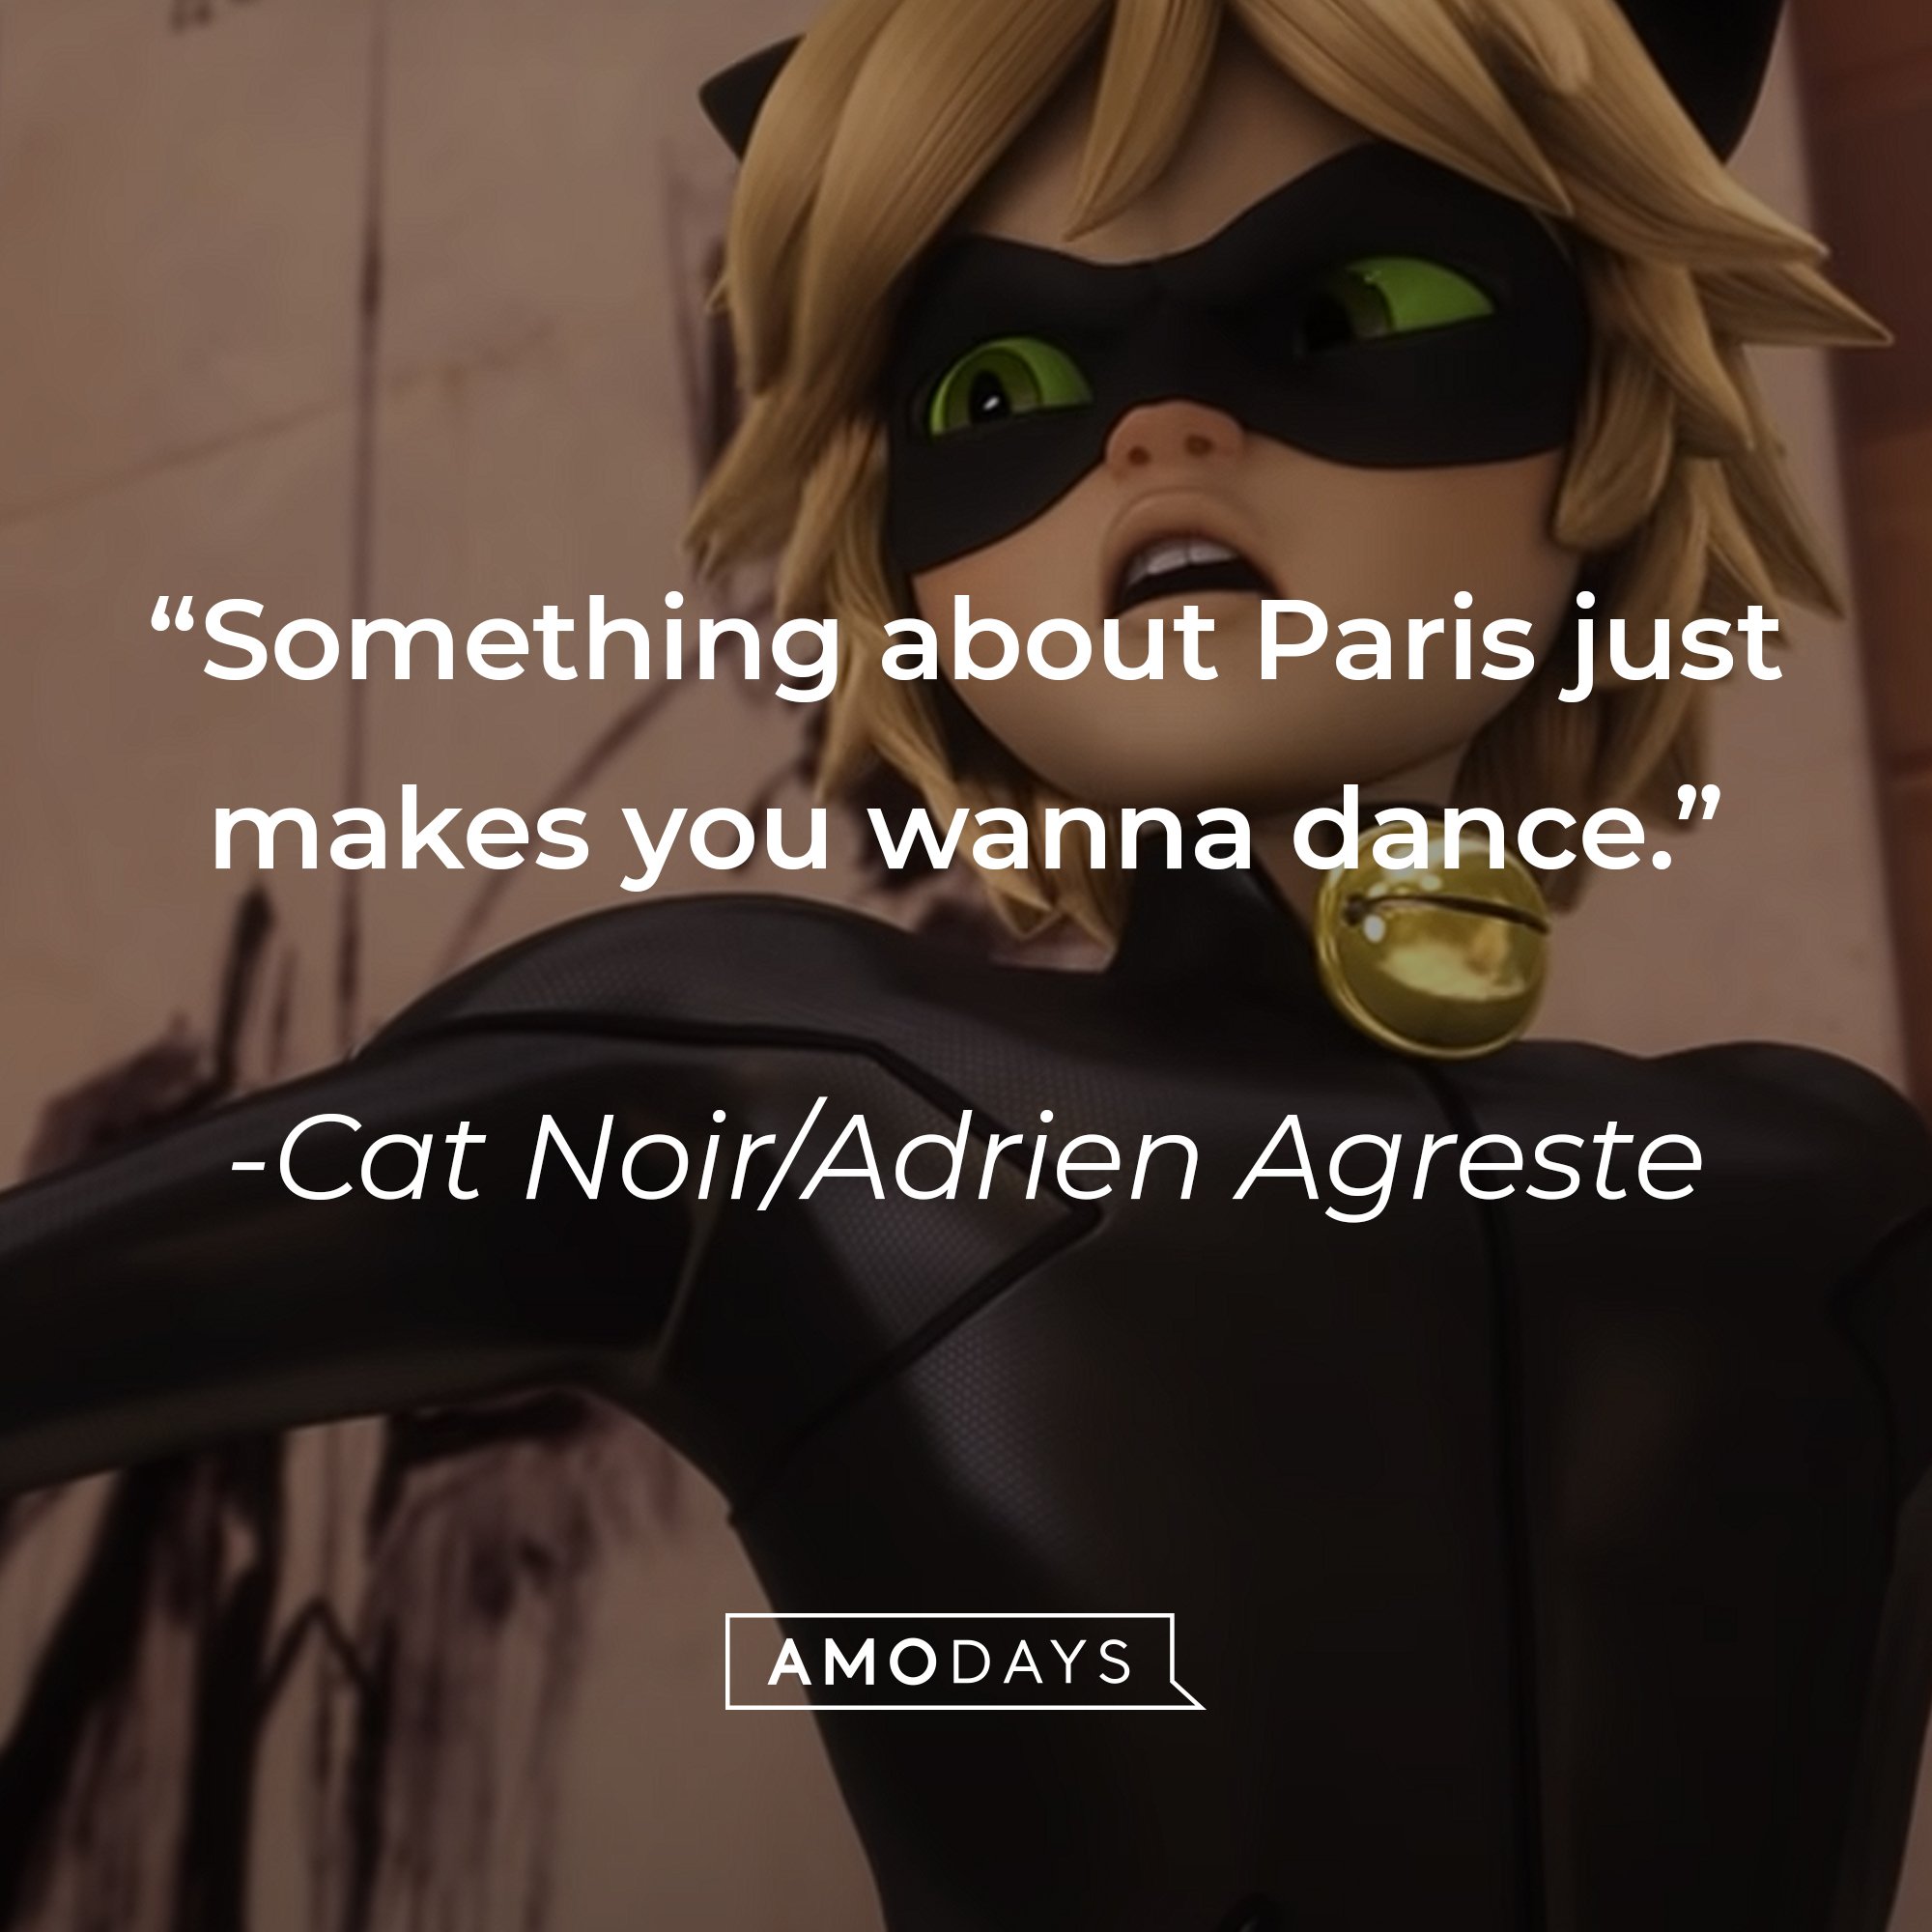 Cat Noir/Adrien Agreste’s quote: "Something about Paris just makes you wanna dance."  | Image: AmoDays 